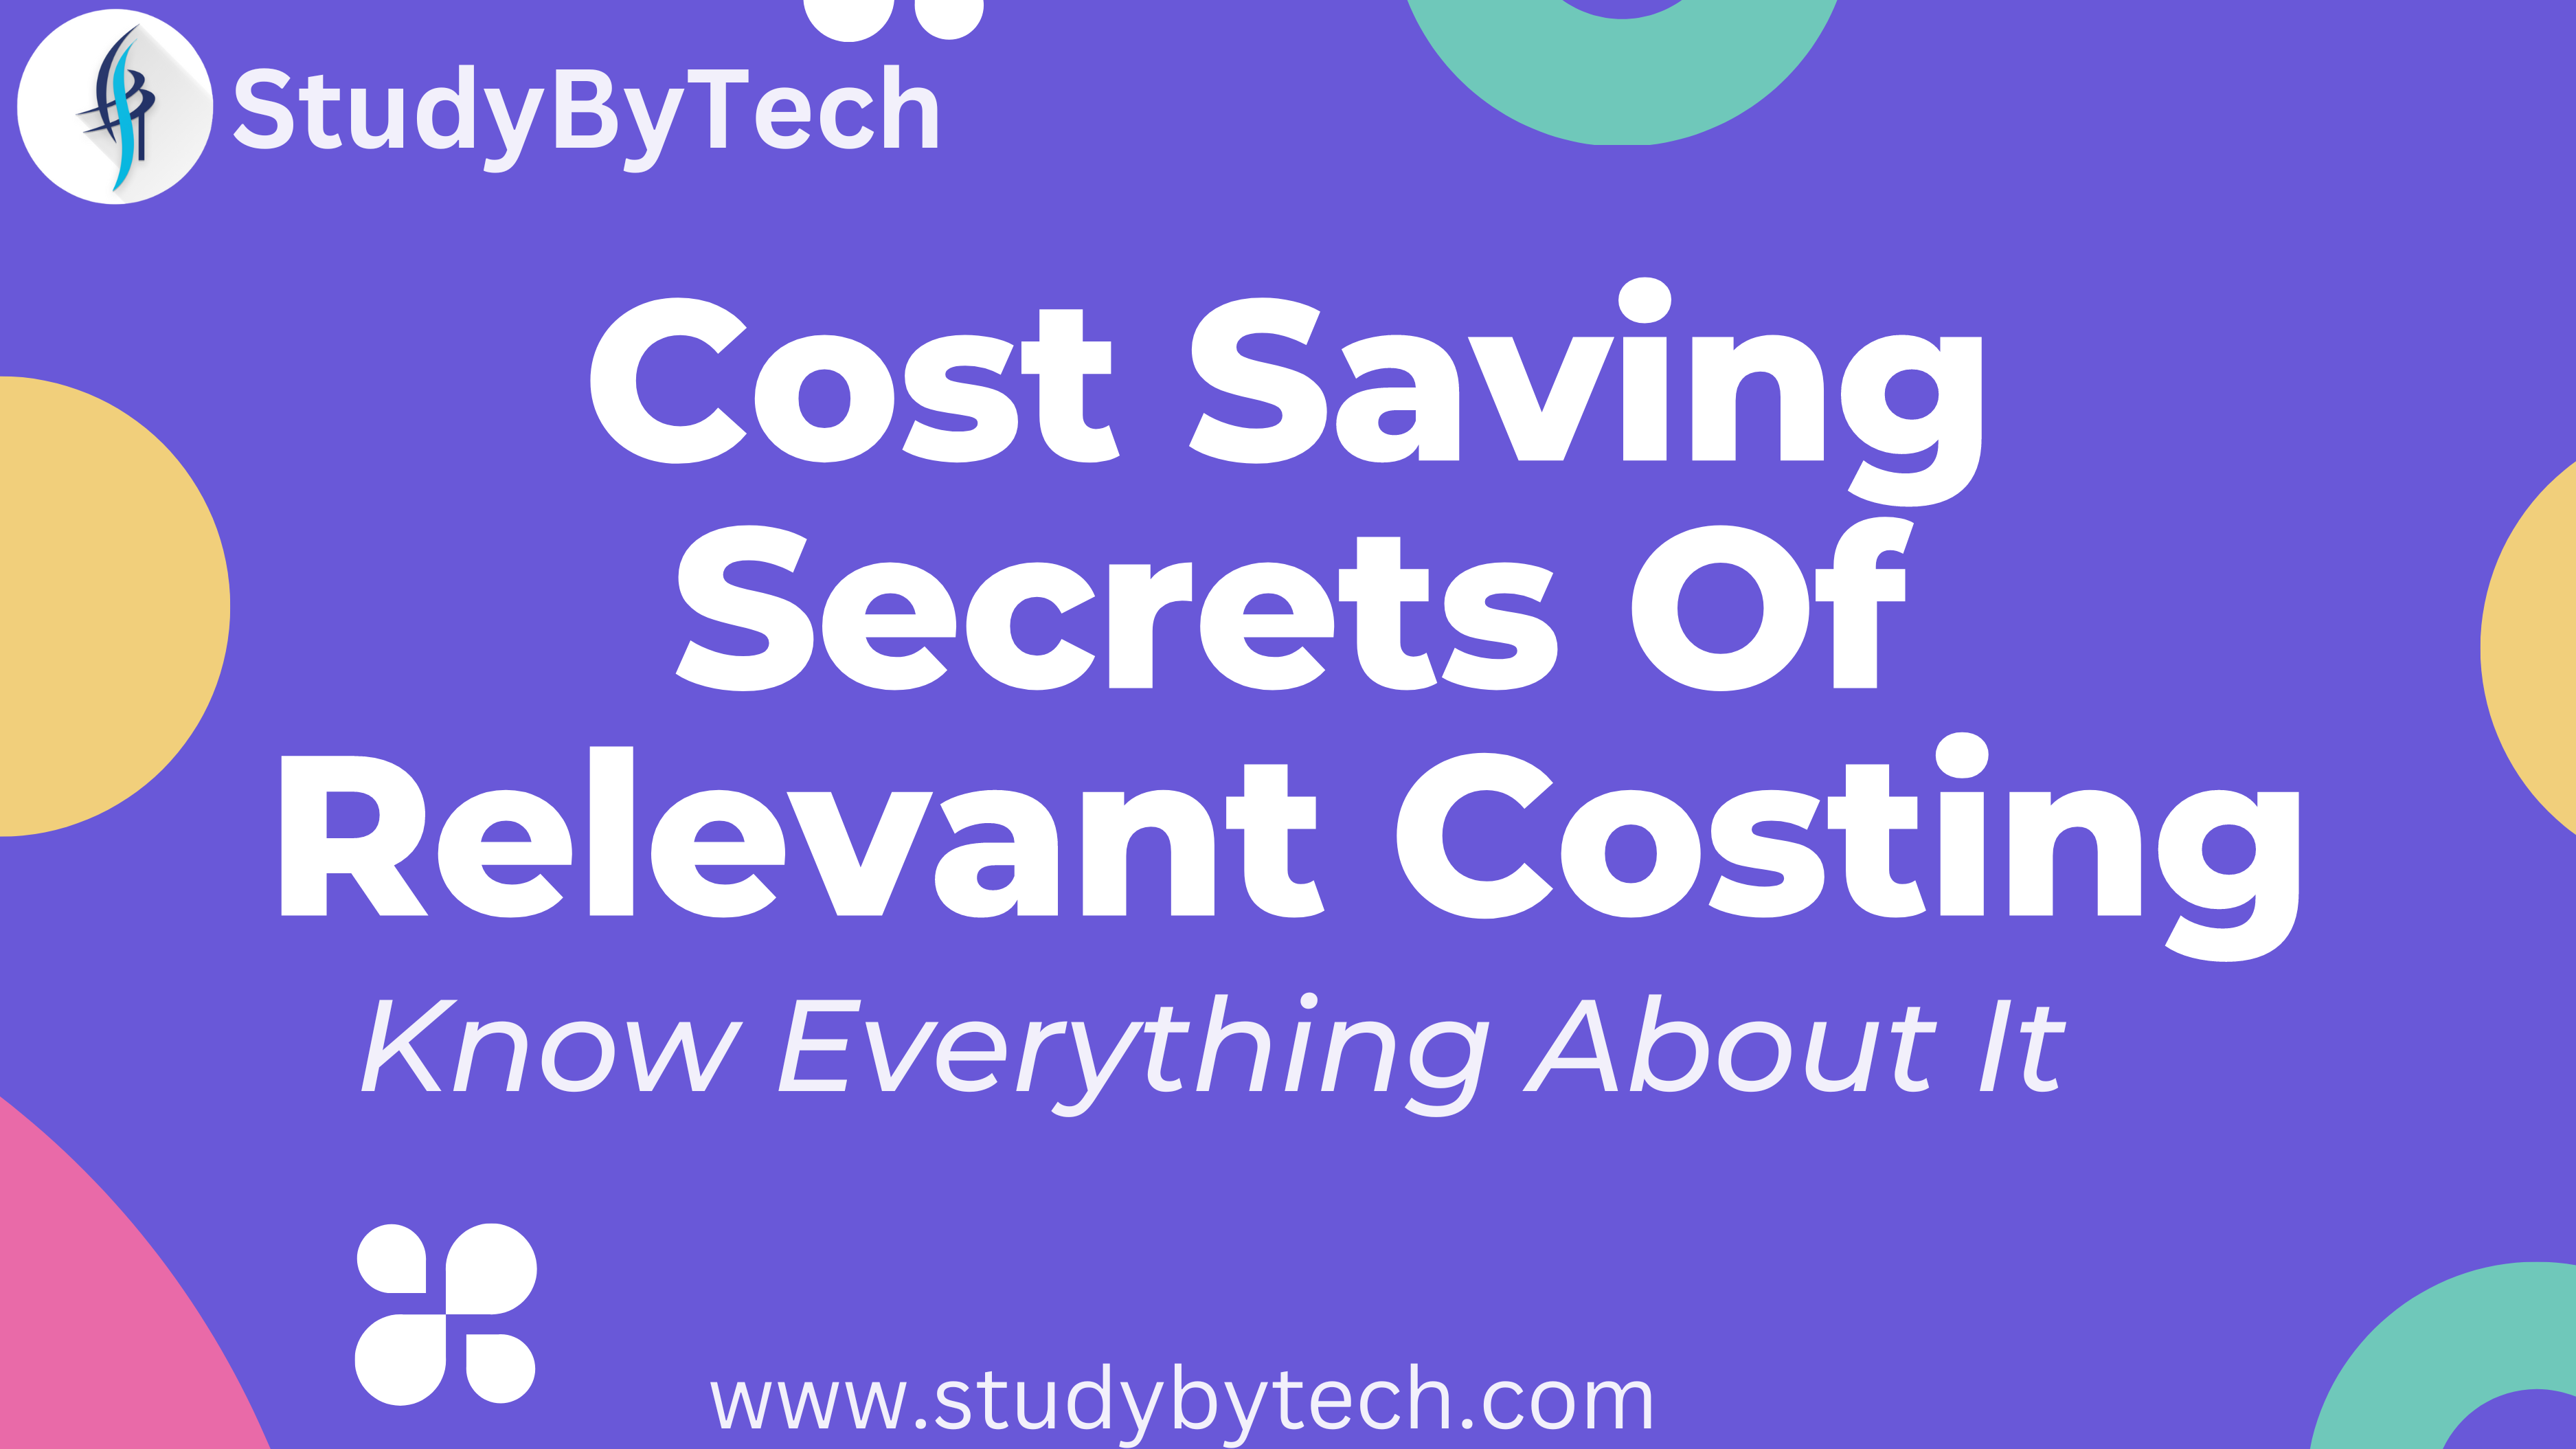 Cost saving